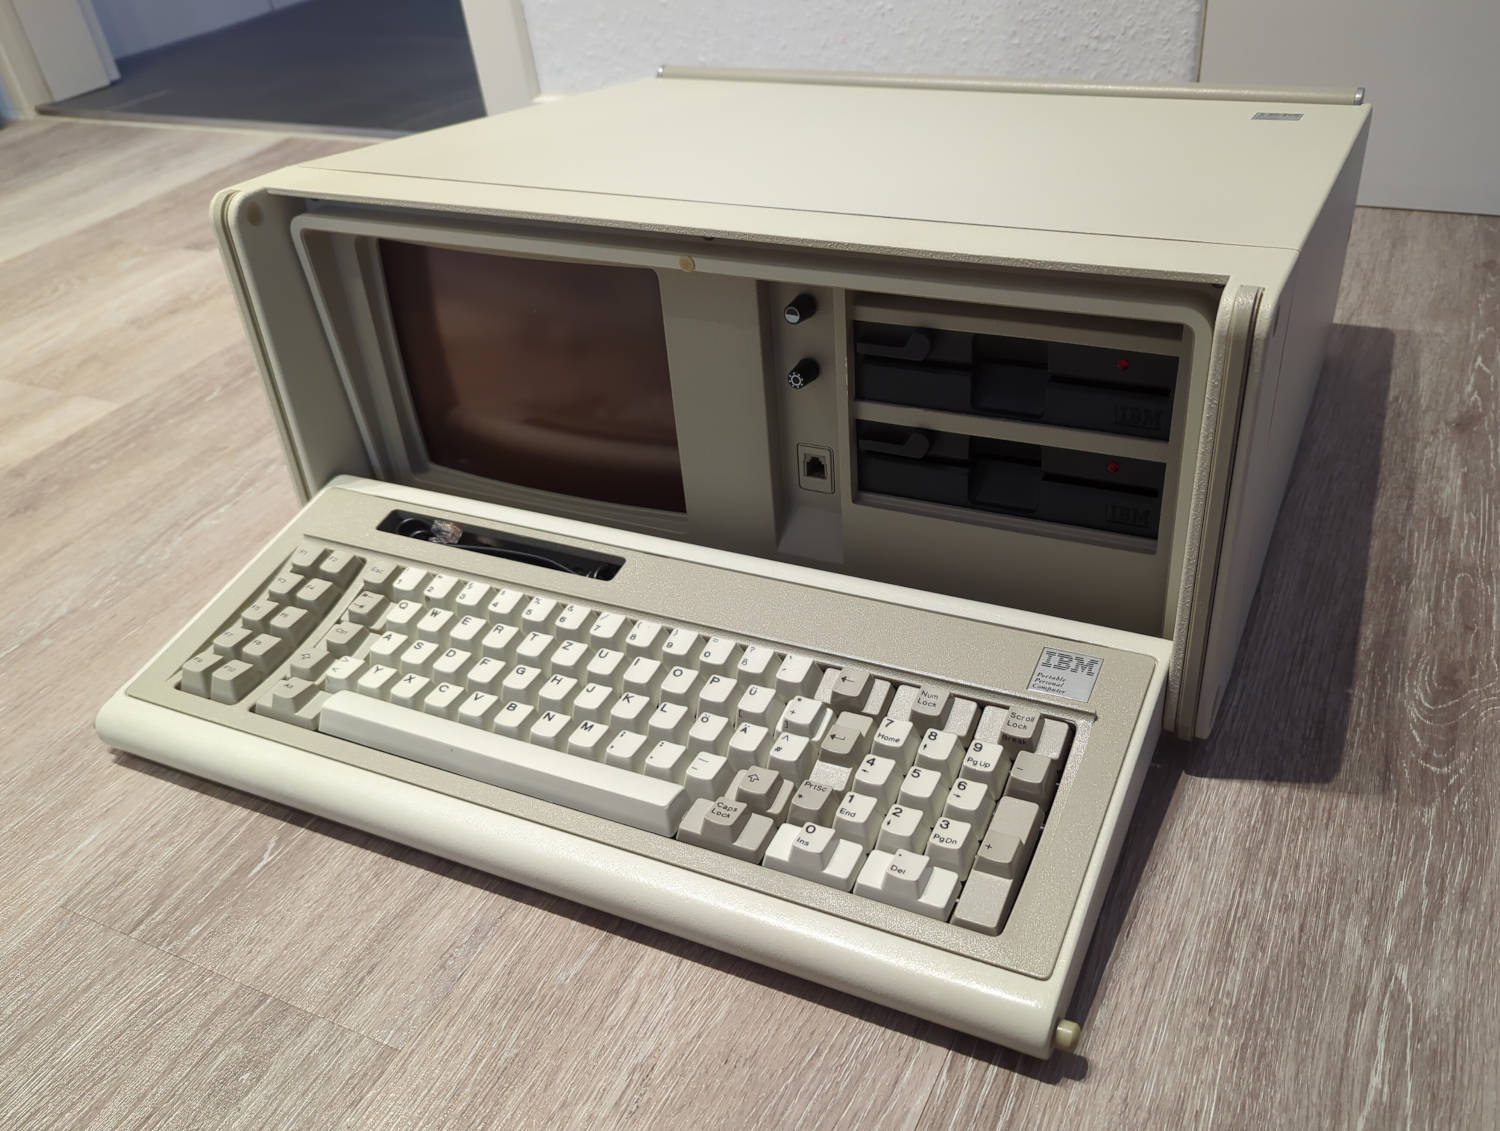 IBM 5155 Portable Personal Computer